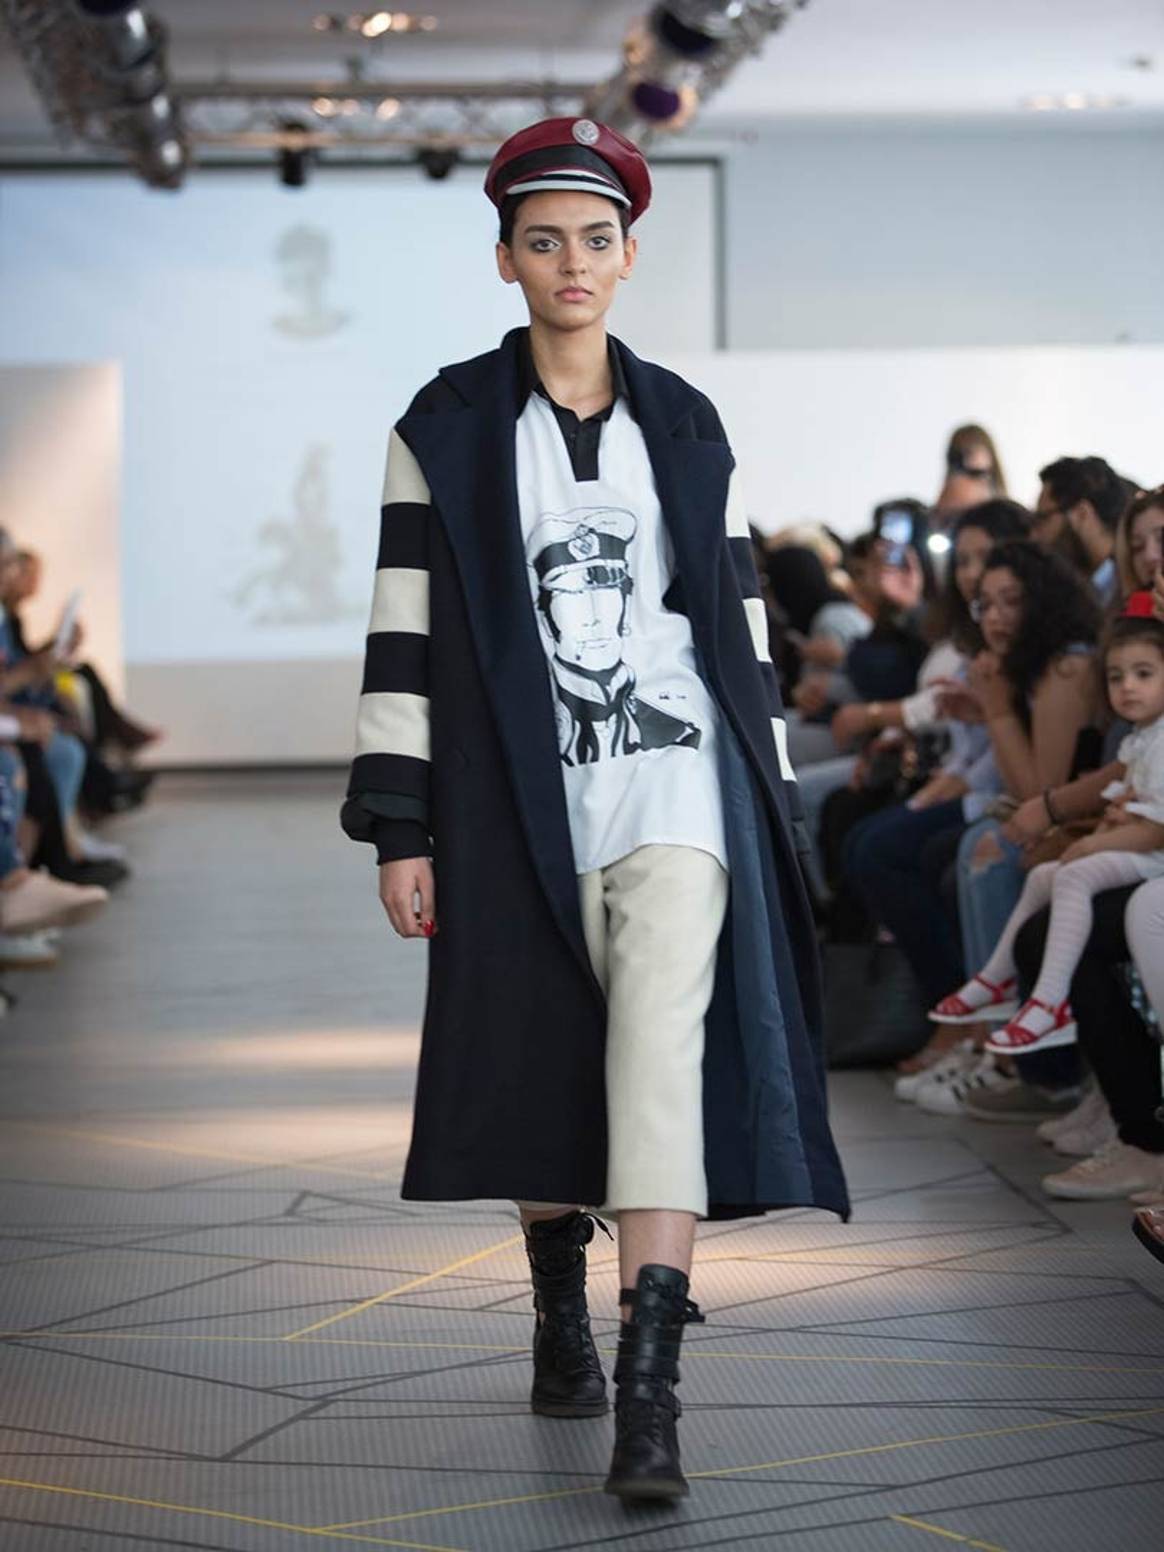 “Casa Moda Academy” arouses the creativity of young Moroccans